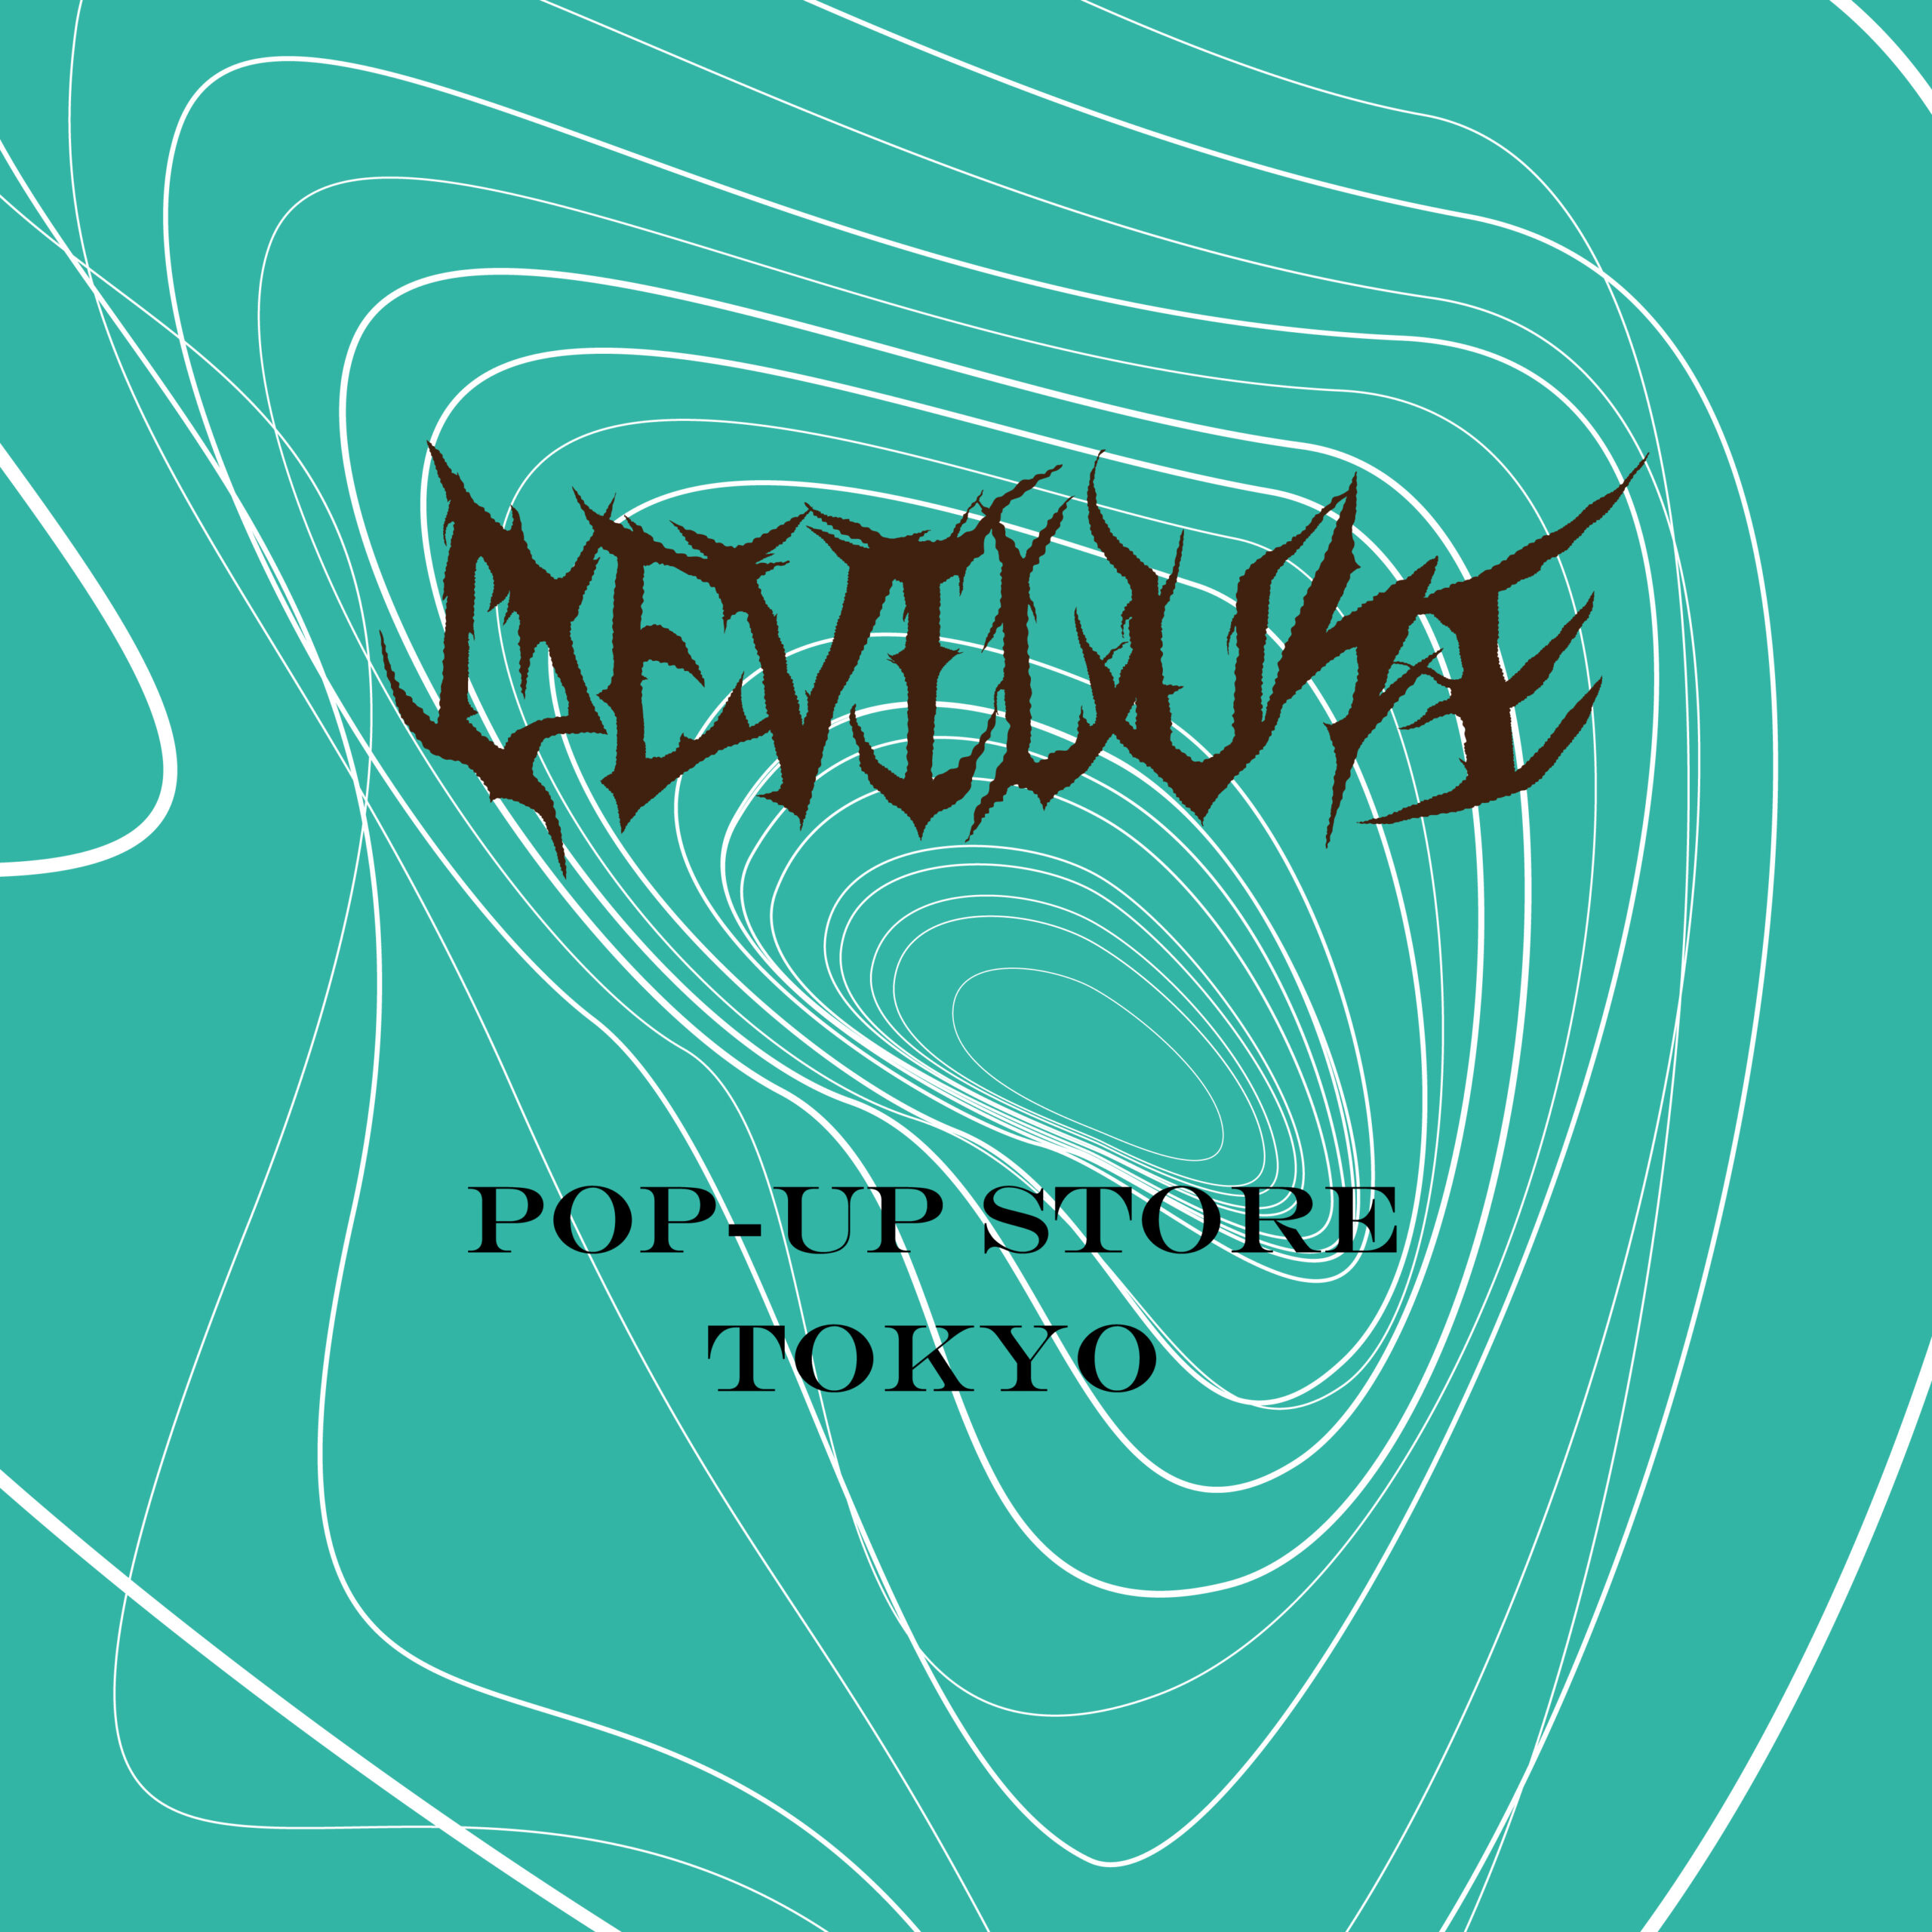 Deviluse POP-UP STORE TOKYO